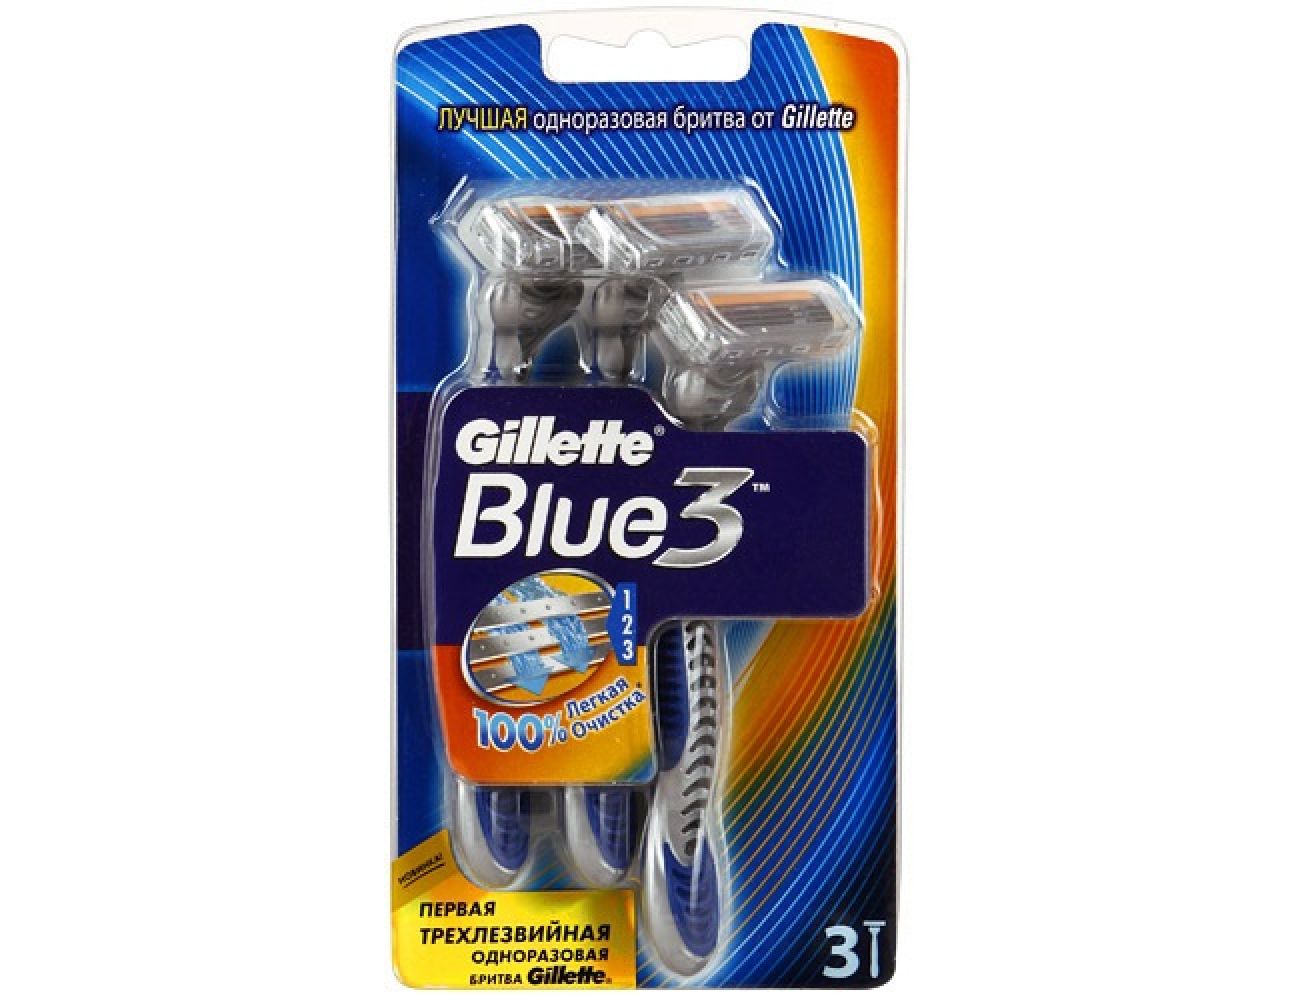 Станок Gillette Blue 3 одноразовый 3 шт. 7702018020324